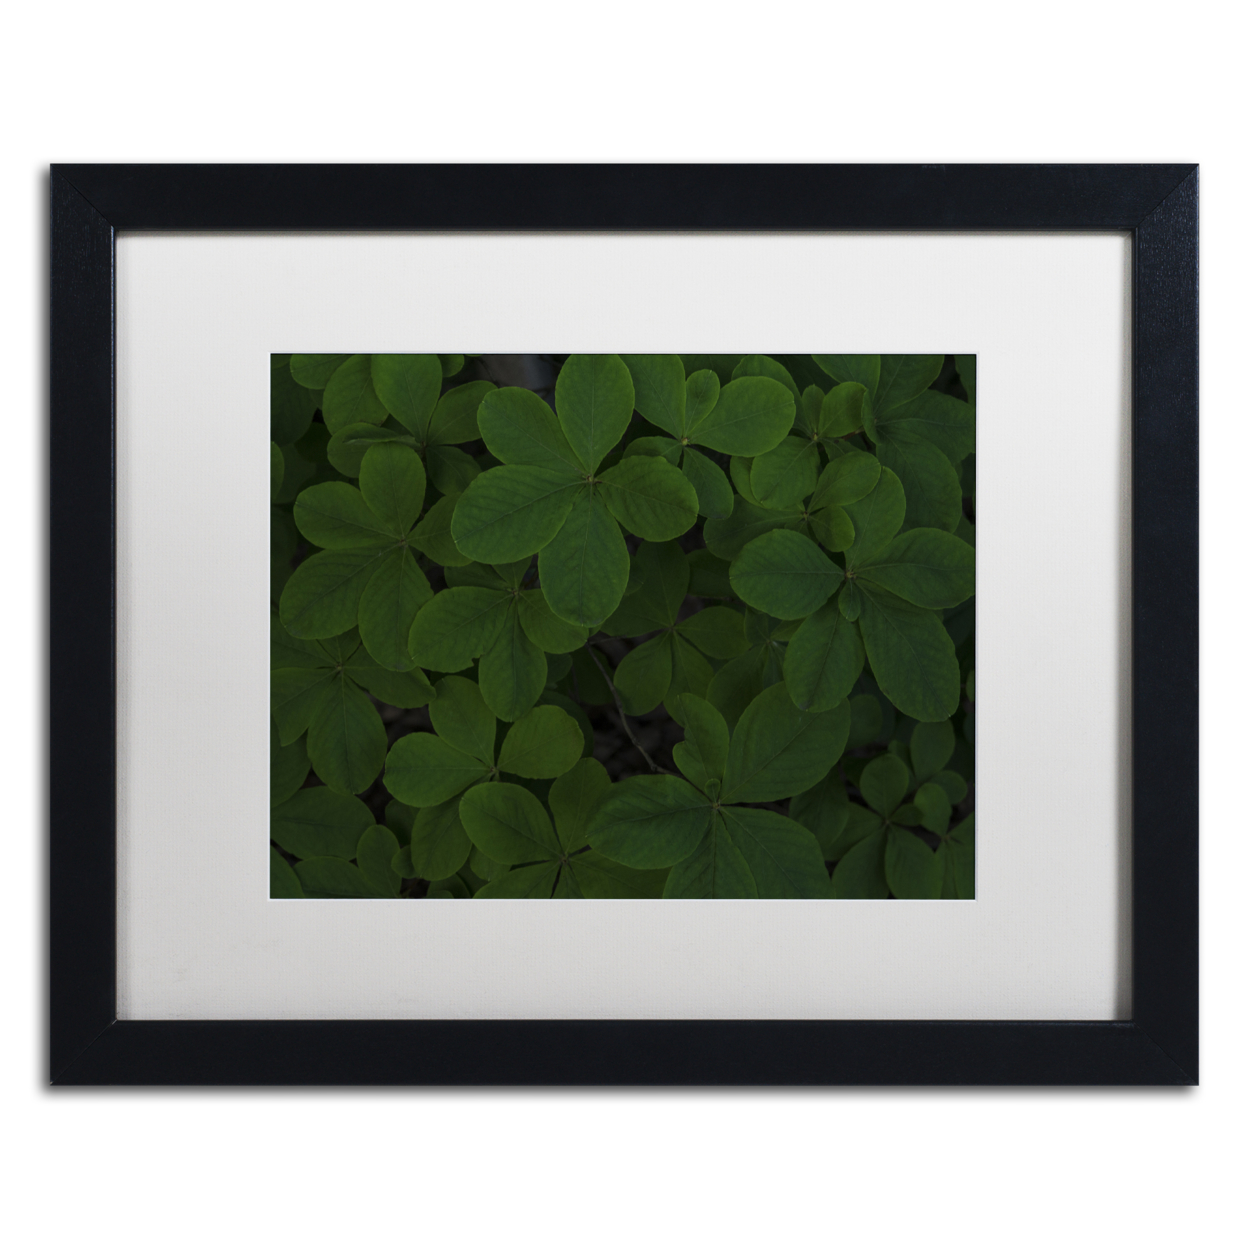 Kurt Shaffer 'Green Leaf Abstract' Black Wooden Framed Art 18 X 22 Inches